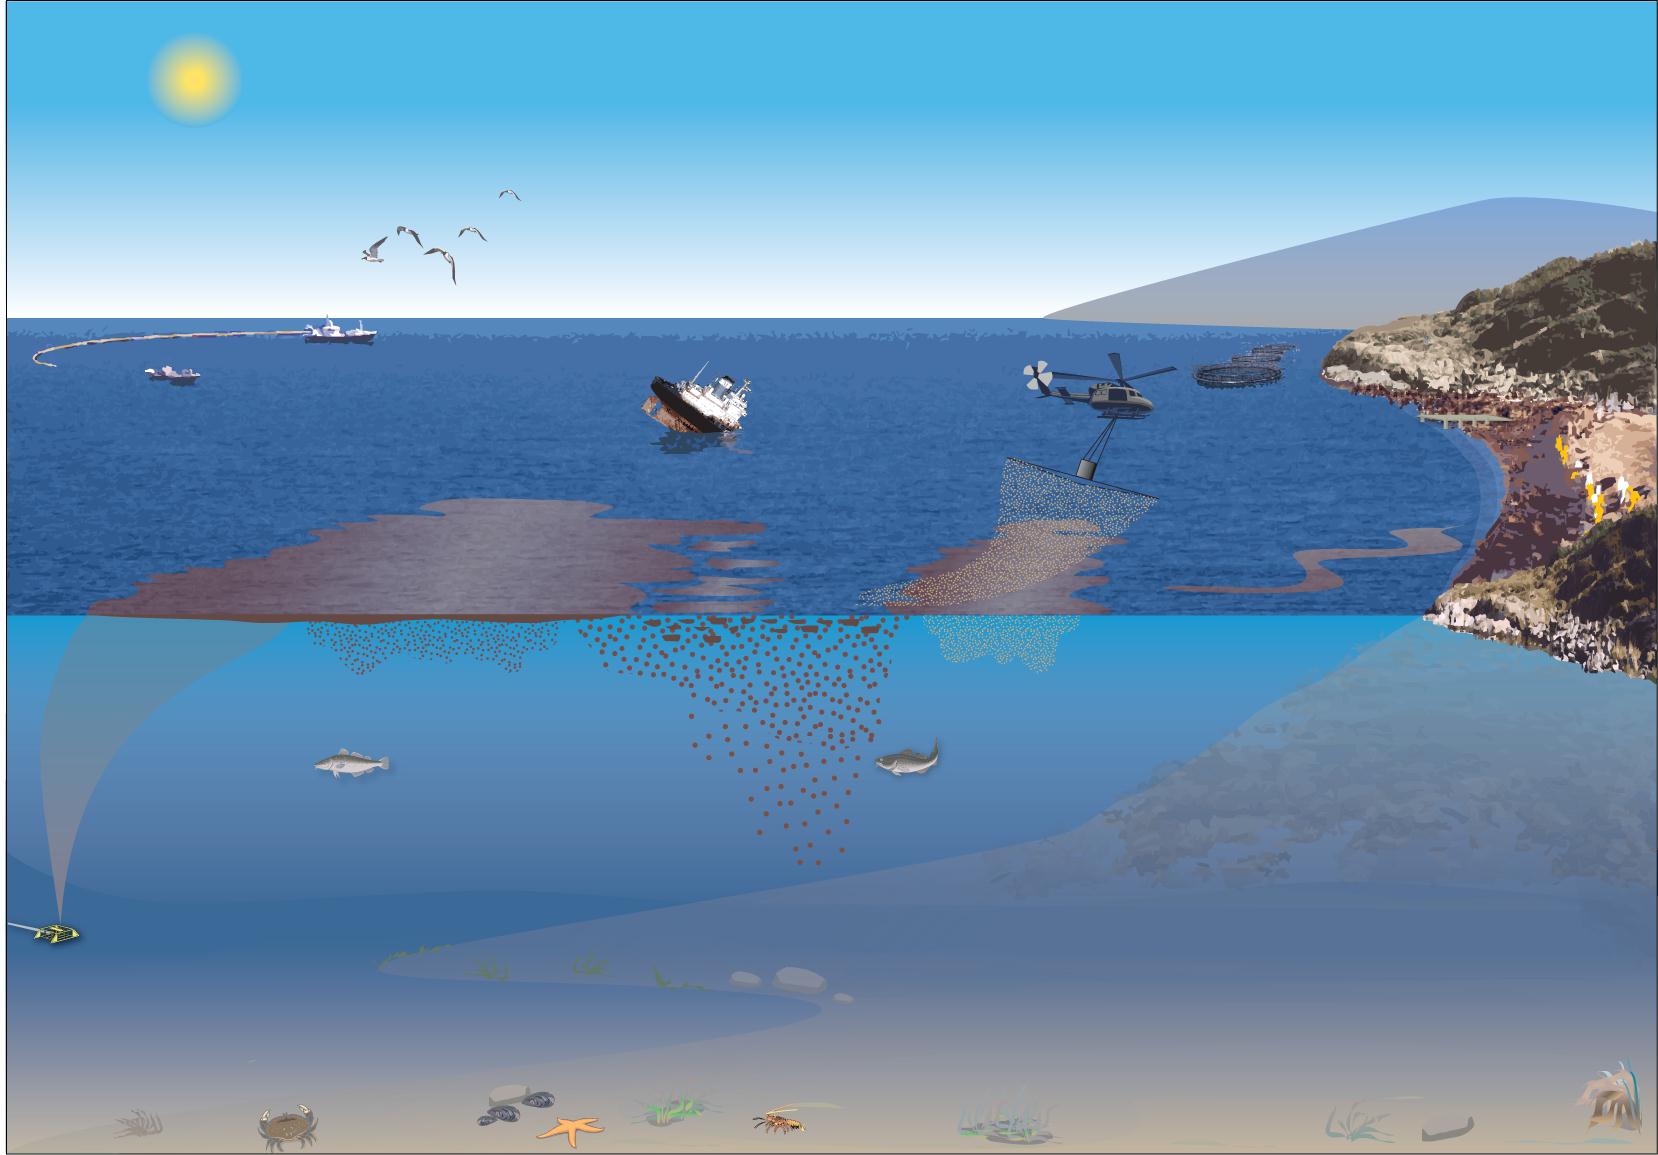 Oljeutslipp: Viktige prosesser Response actions Volatilization from water to air